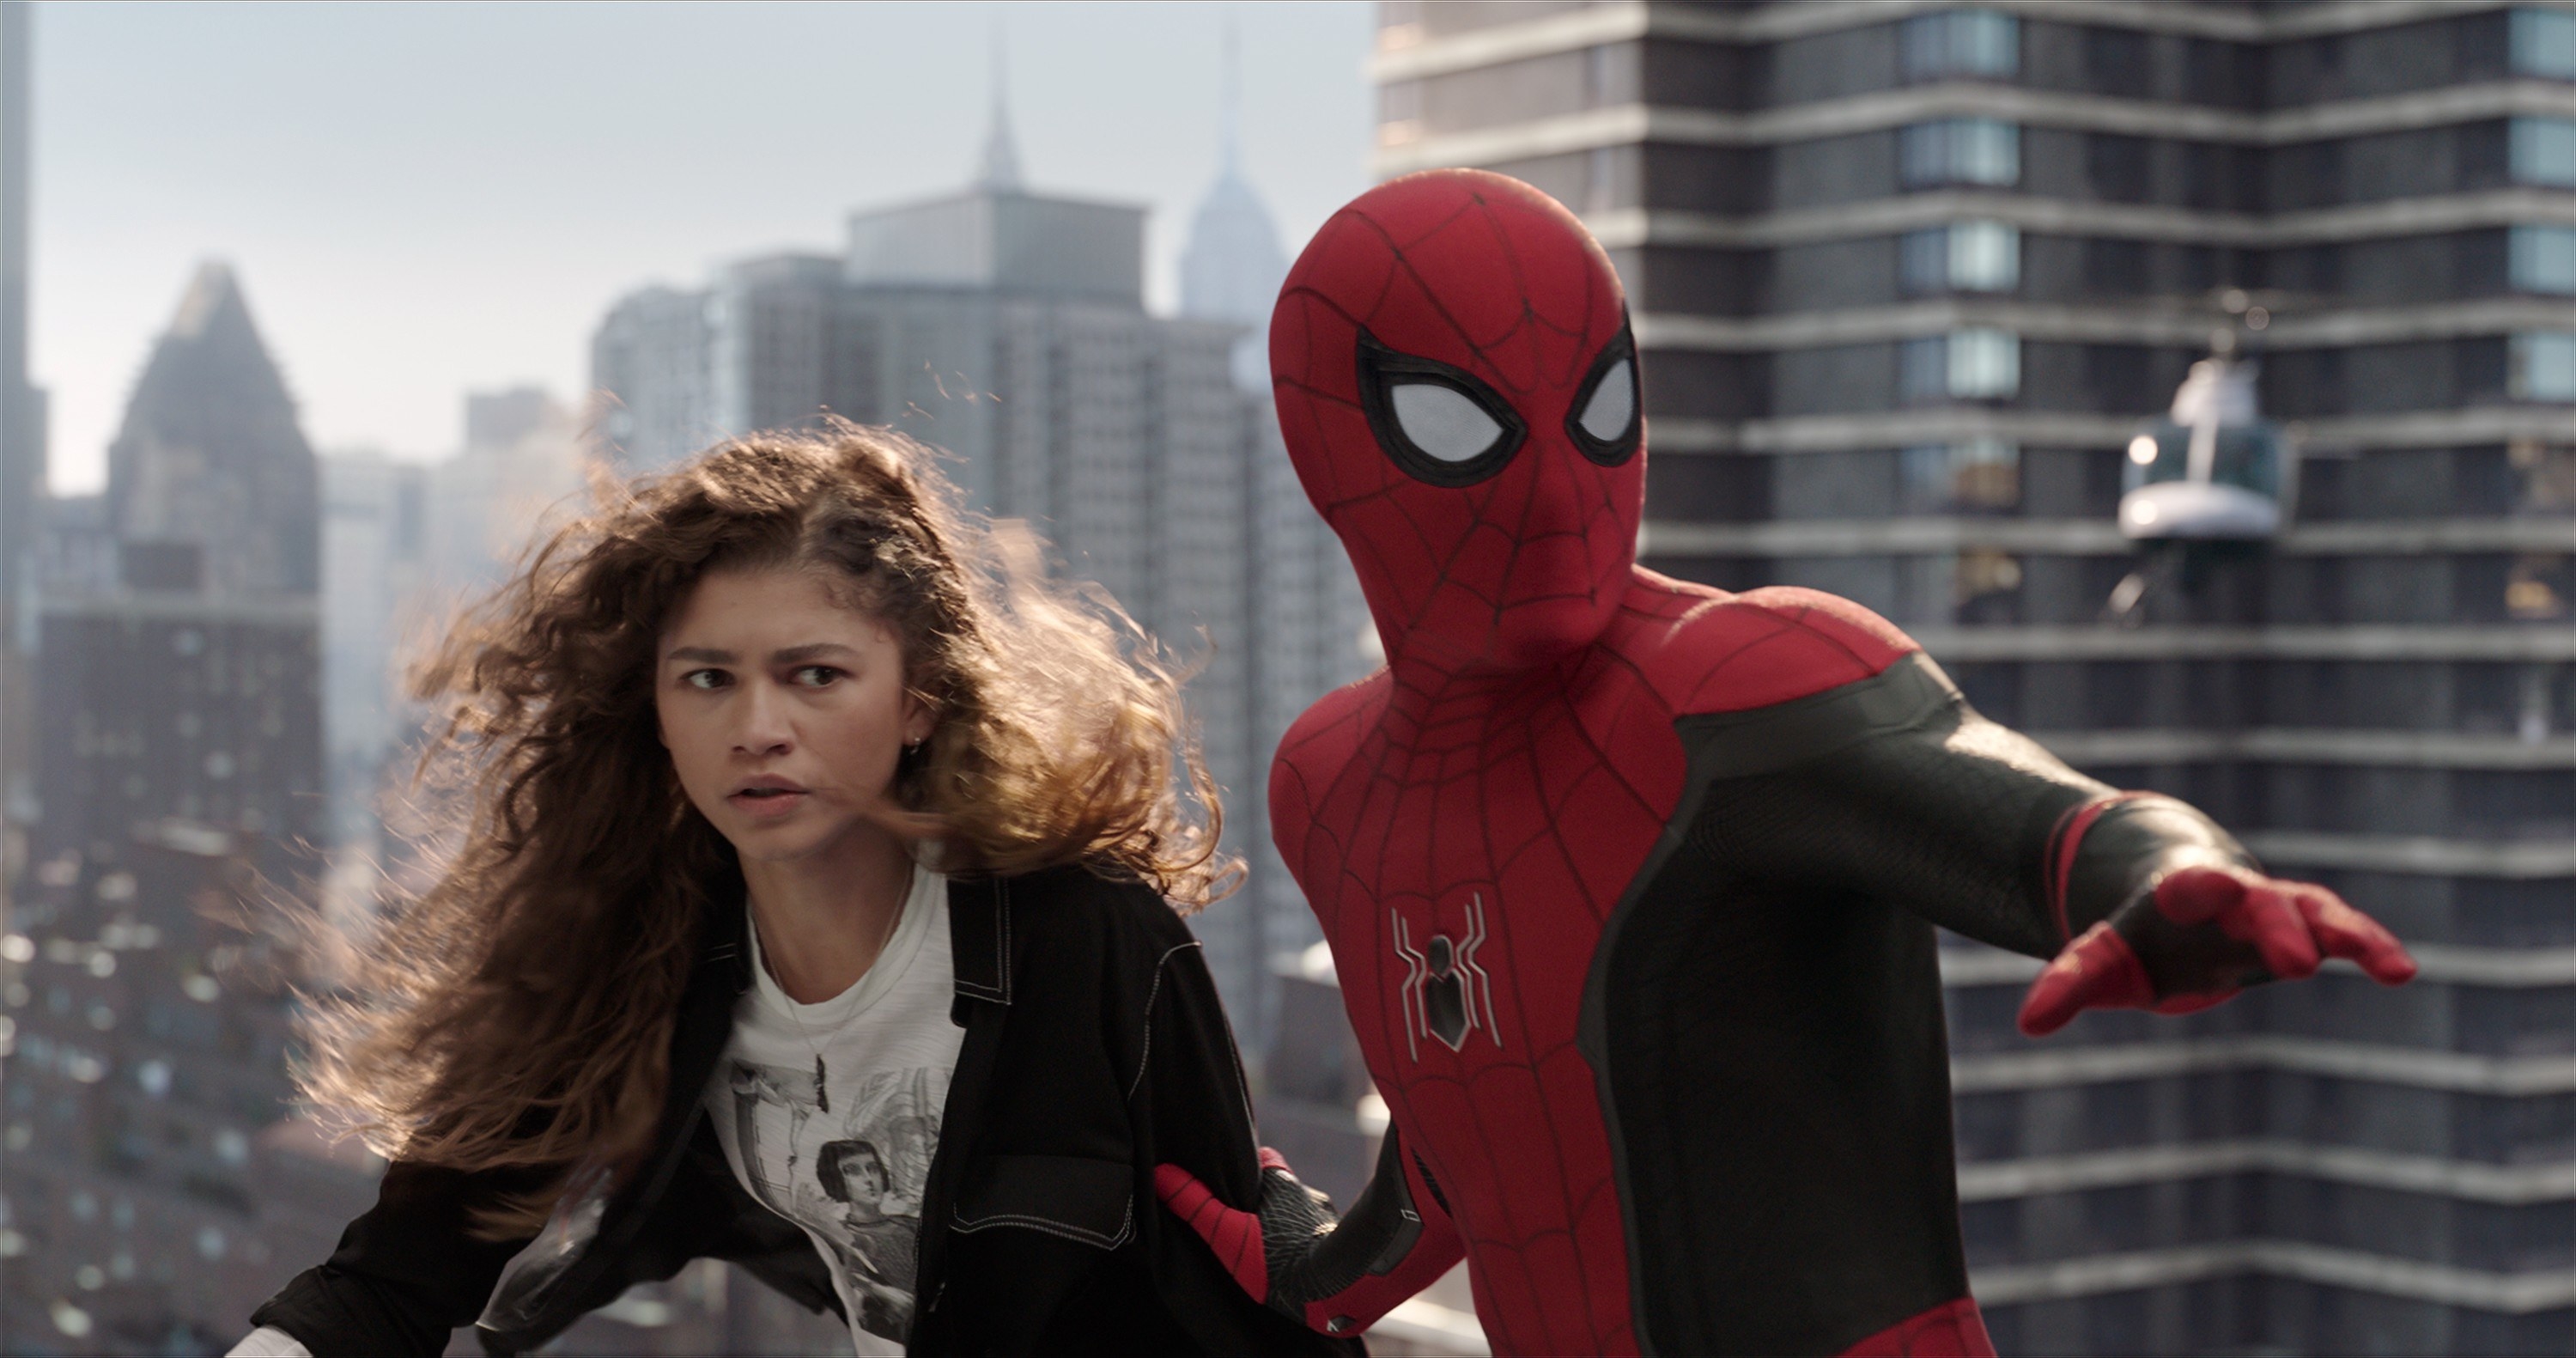 SPIDER-MAN: NO WAY HOME, from left: Zendaya, Tom Holland as Spider-Man, 2021